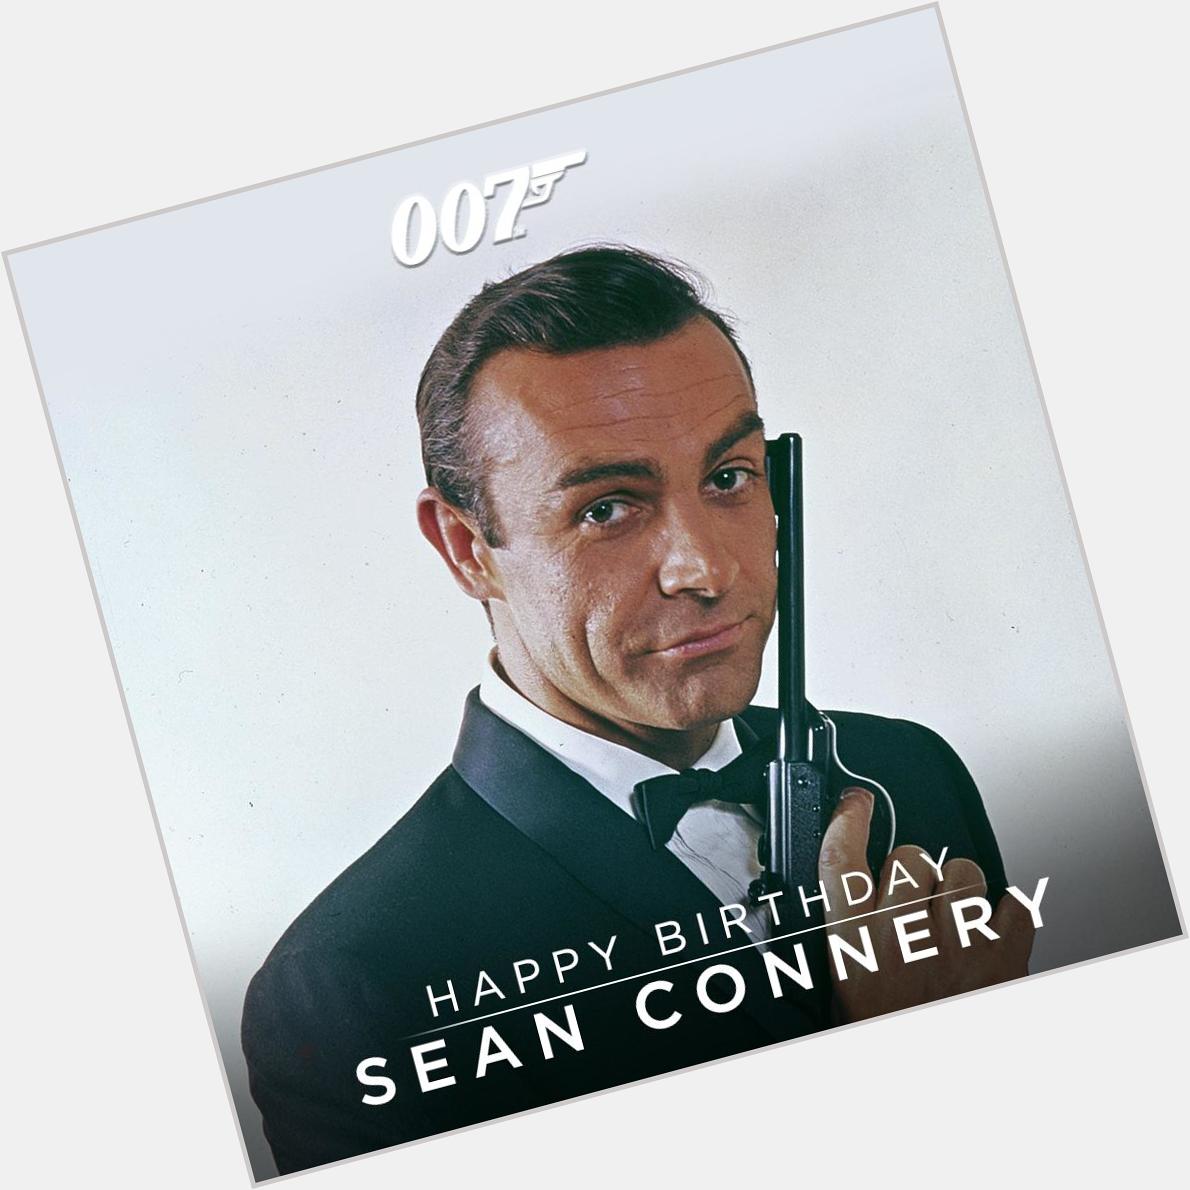 Thx 4 sharing: Happy Birthday to Sean Connery 